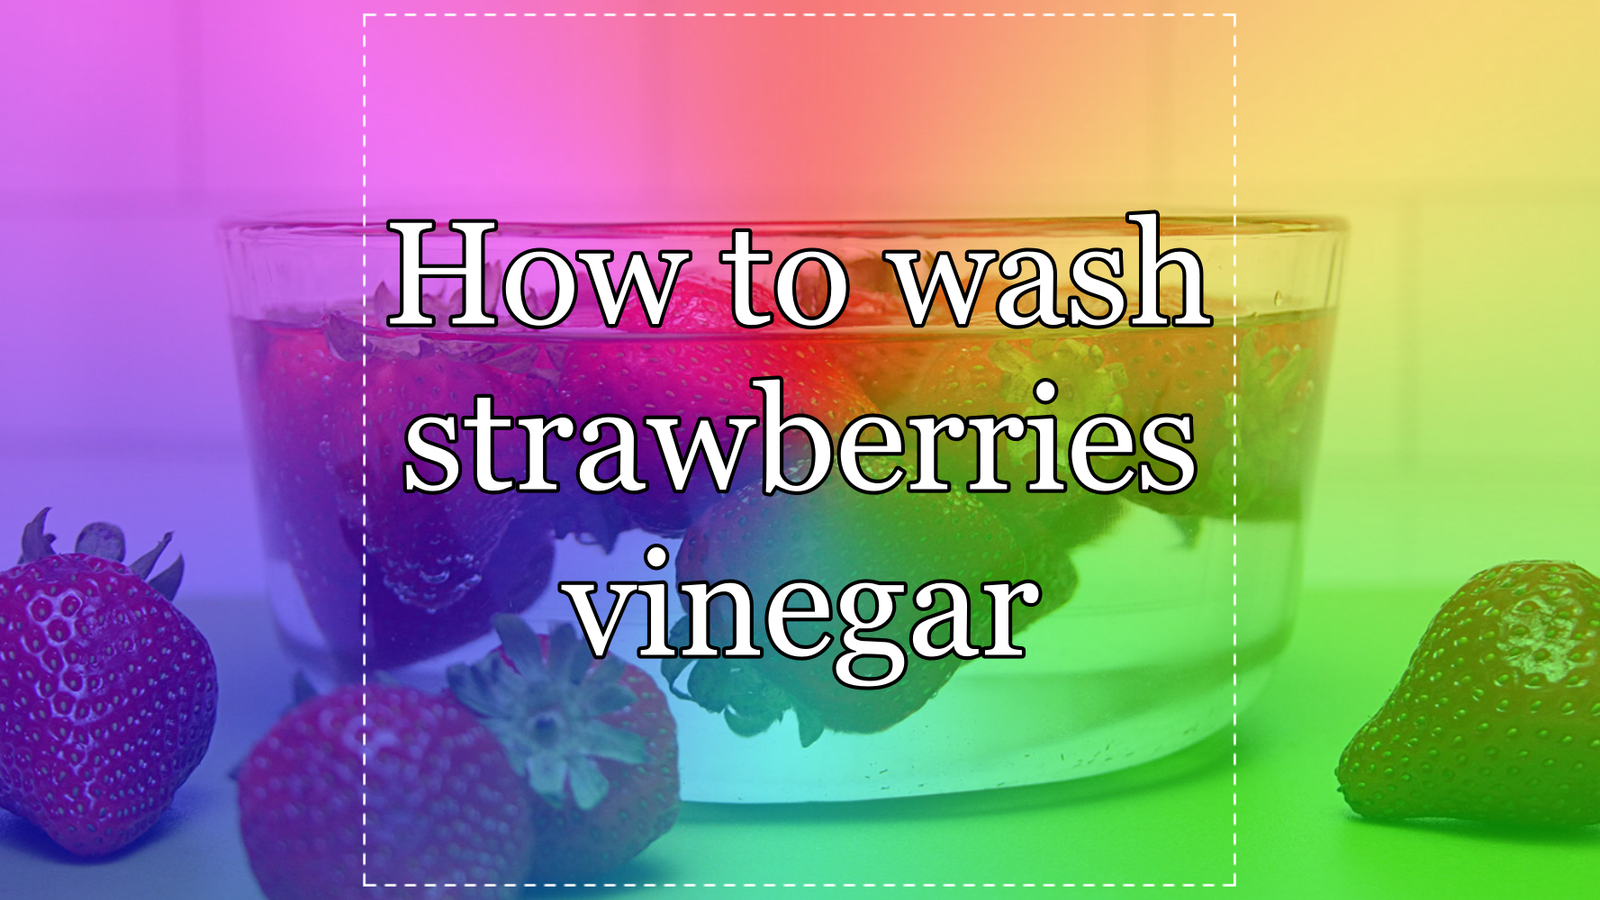 How to wash strawberries vinegar